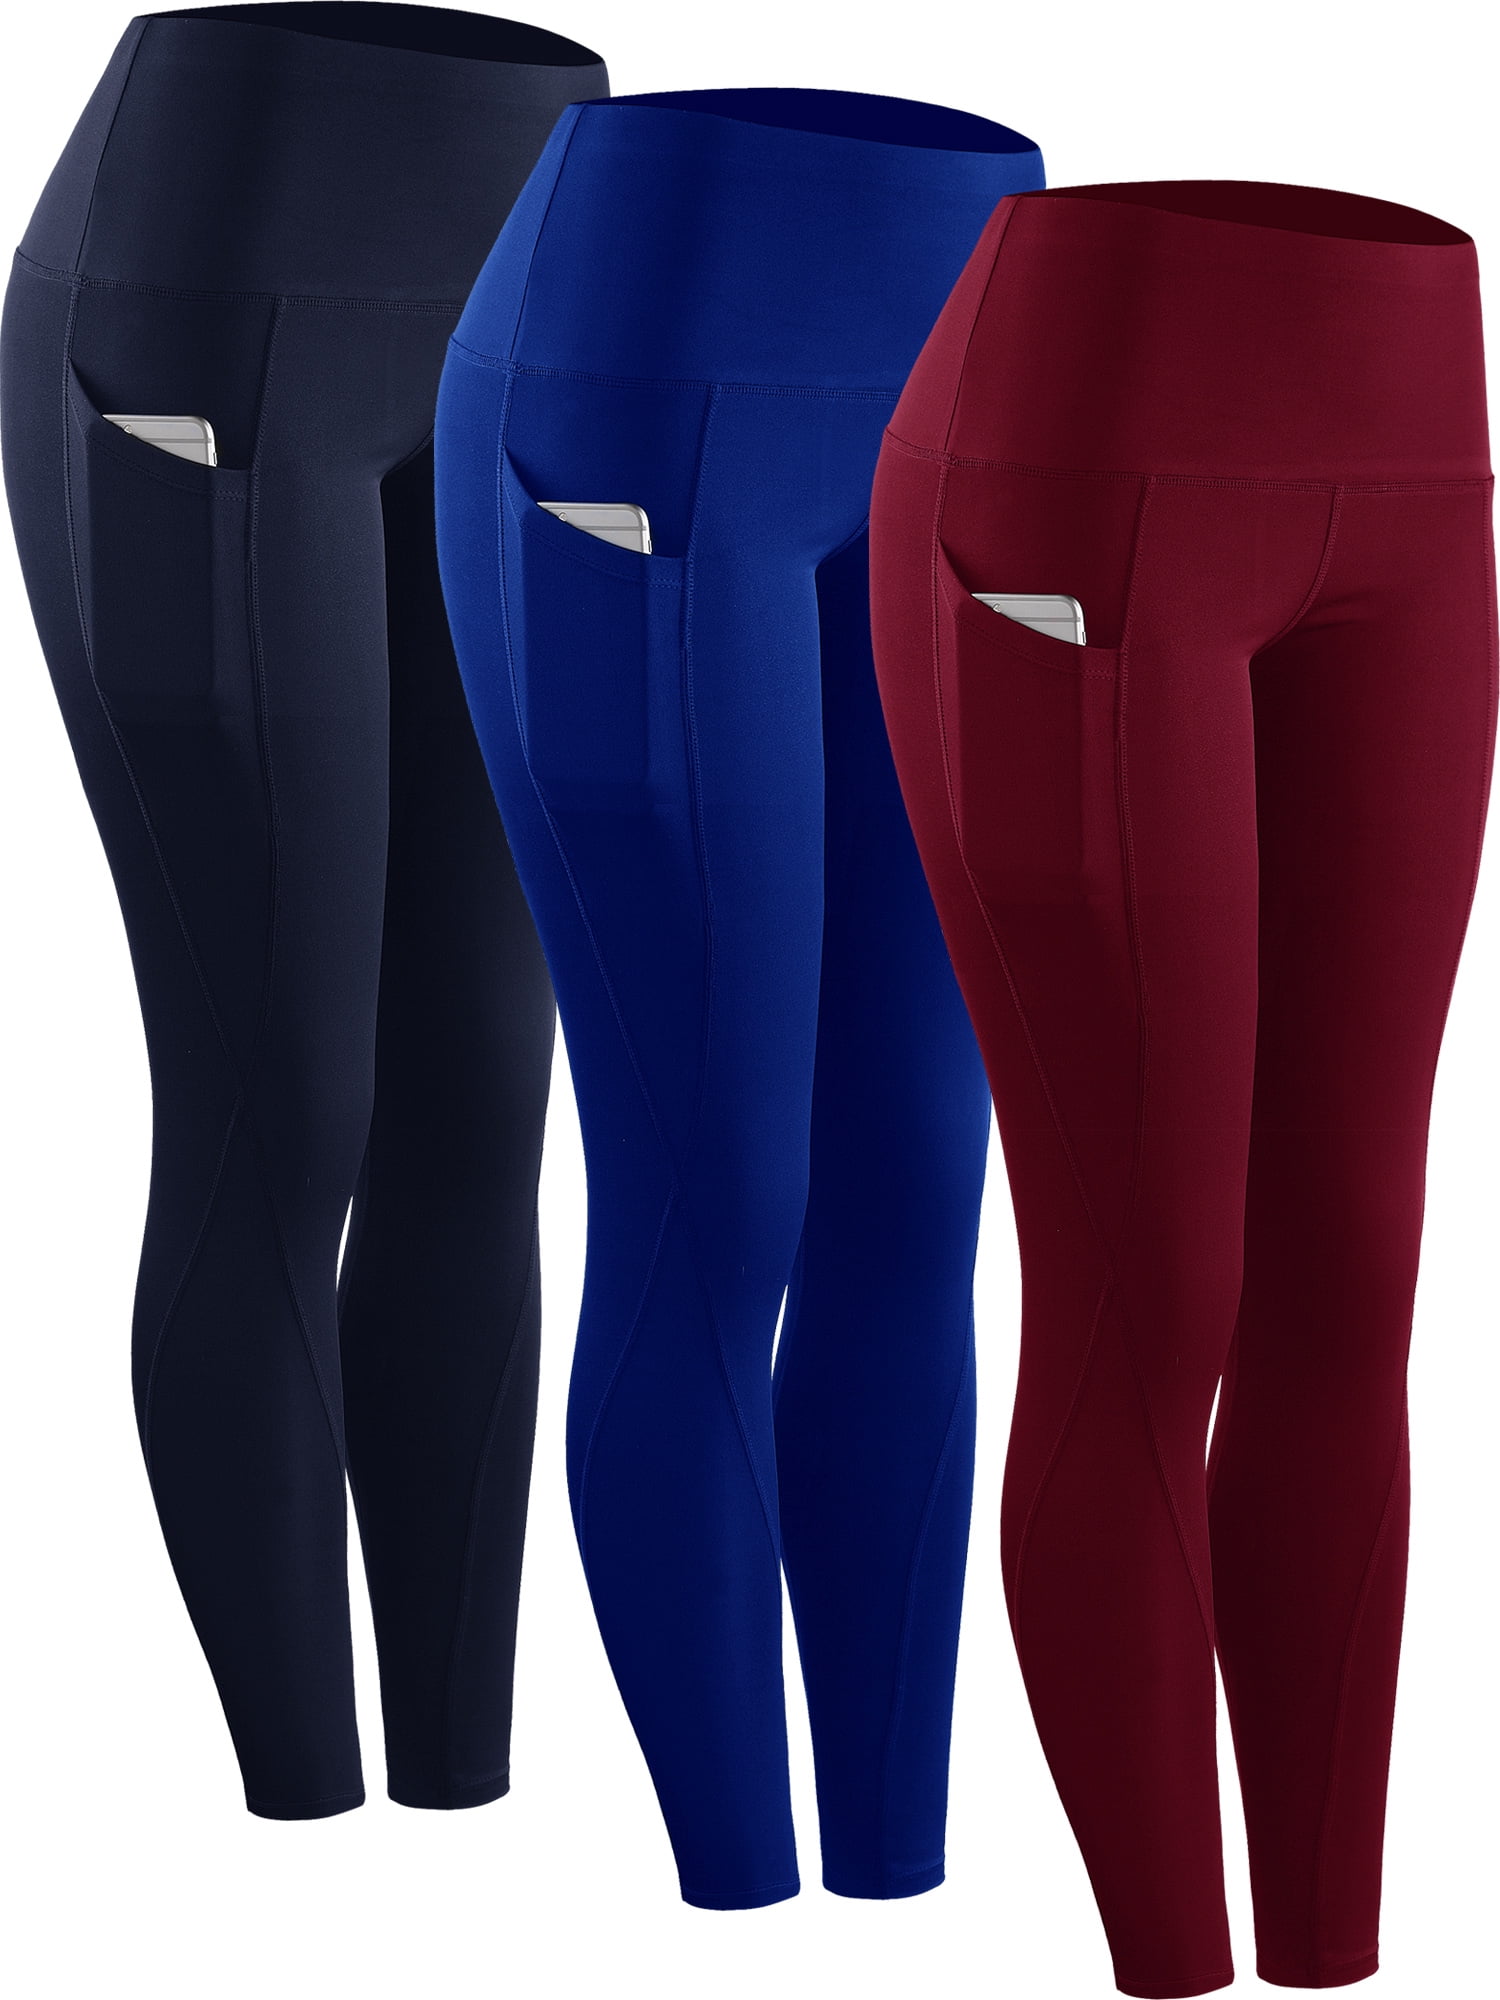 NELEUS Womens High Waist Running Workout Yoga Leggings with Pockets,Navy  Blue+Blue+Red,US Size XL